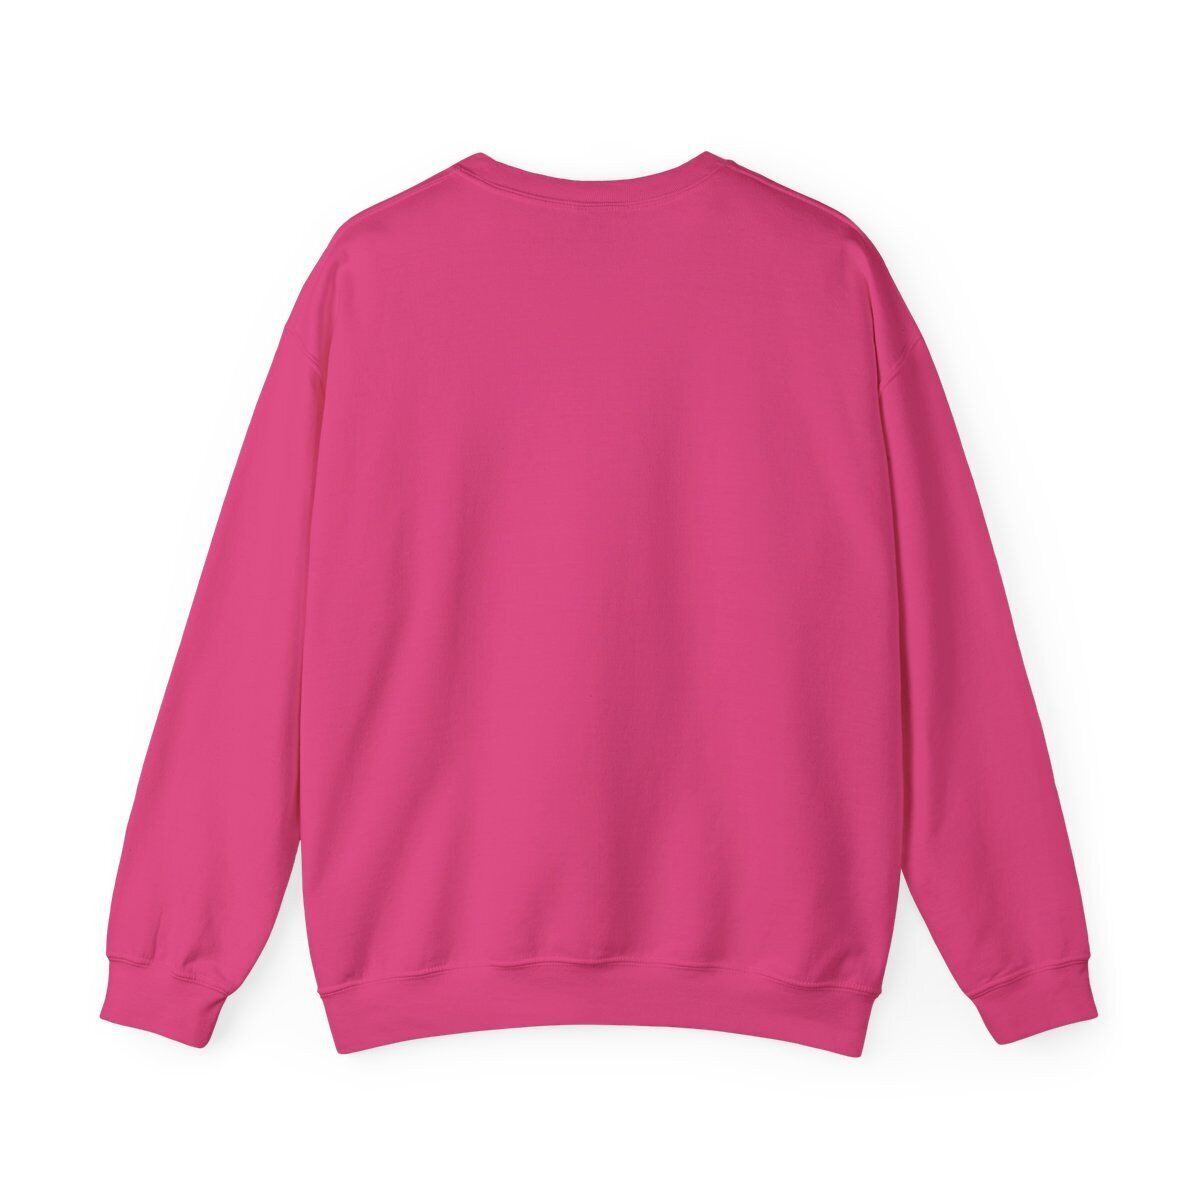 Nirvana Smiley Face Sweatshirt Women Heliconia Pink COMFY | eBay